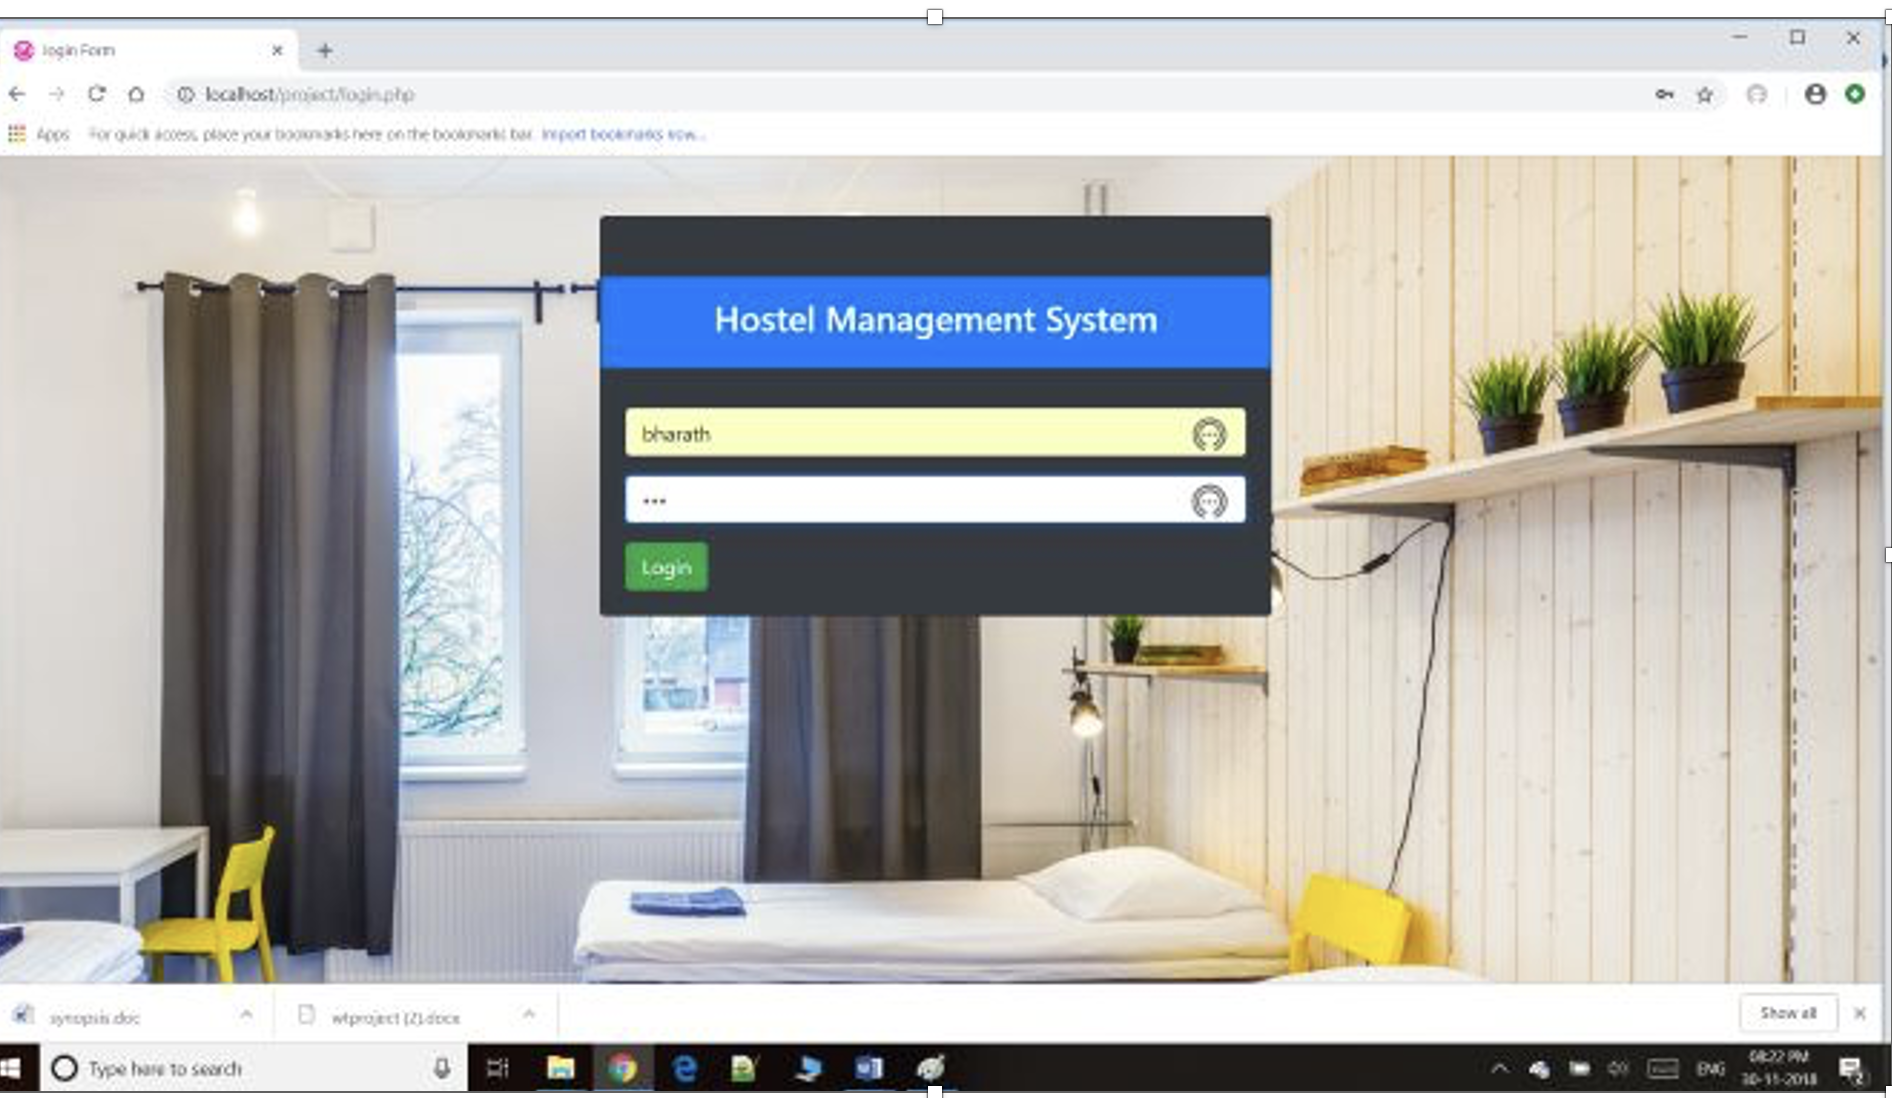 Hostel Management System screenshot